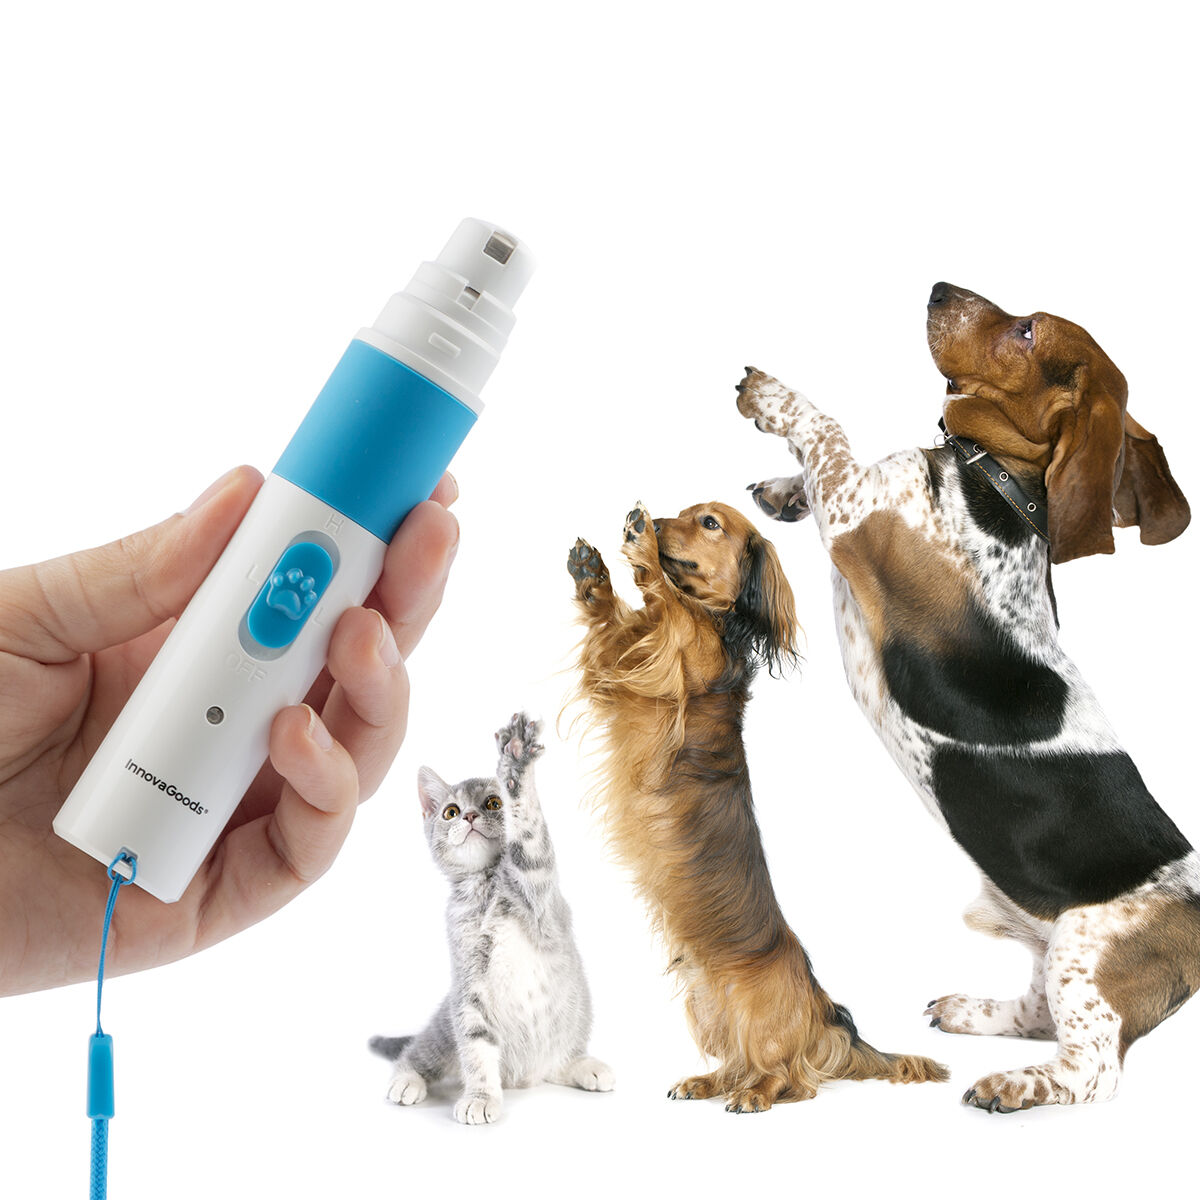 Аккумуляторная пилка для домашних животных Pawy InnovaGoods